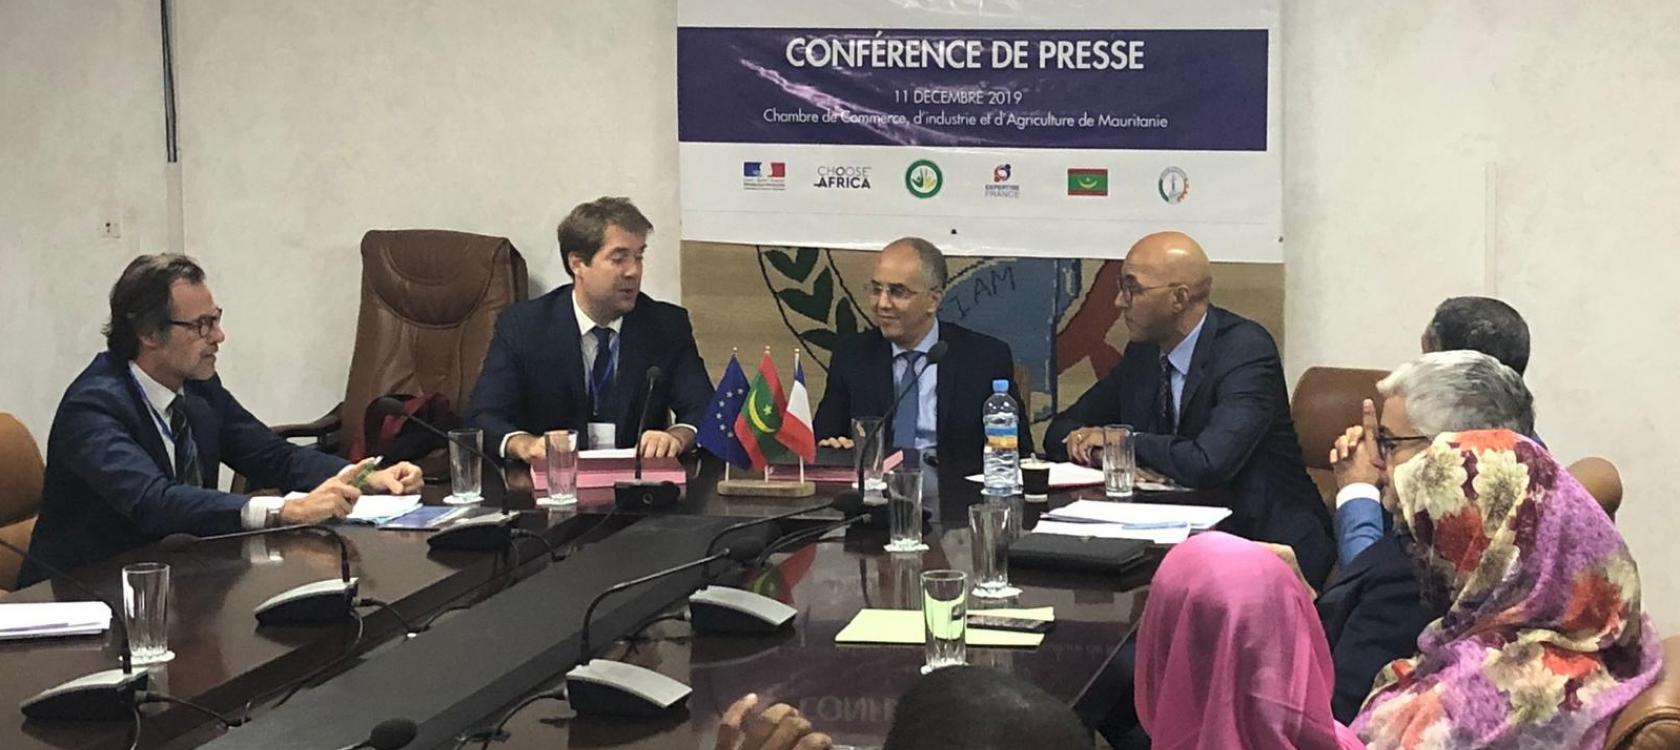 Attijari Bank Mauritania partners with Proparco to guarantee loans to SMEs